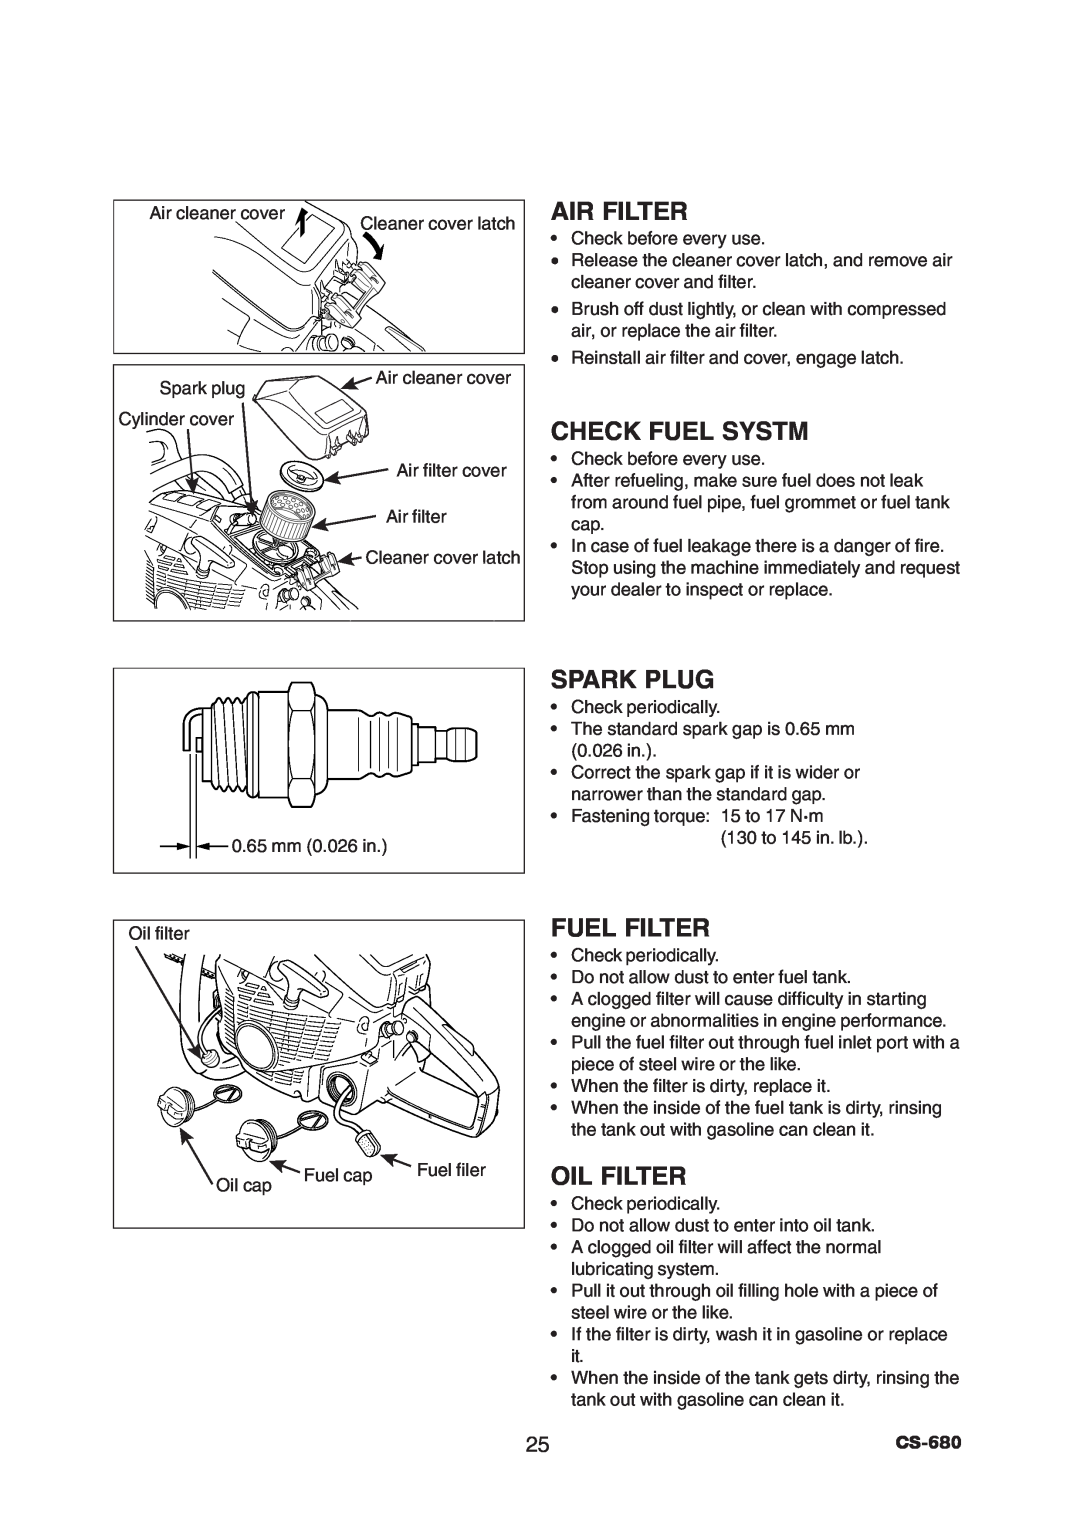 Echo CS-680 instruction manual Air Filter, Check Fuel Systm, Spark Plug, Fuel Filter, Oil Filter 